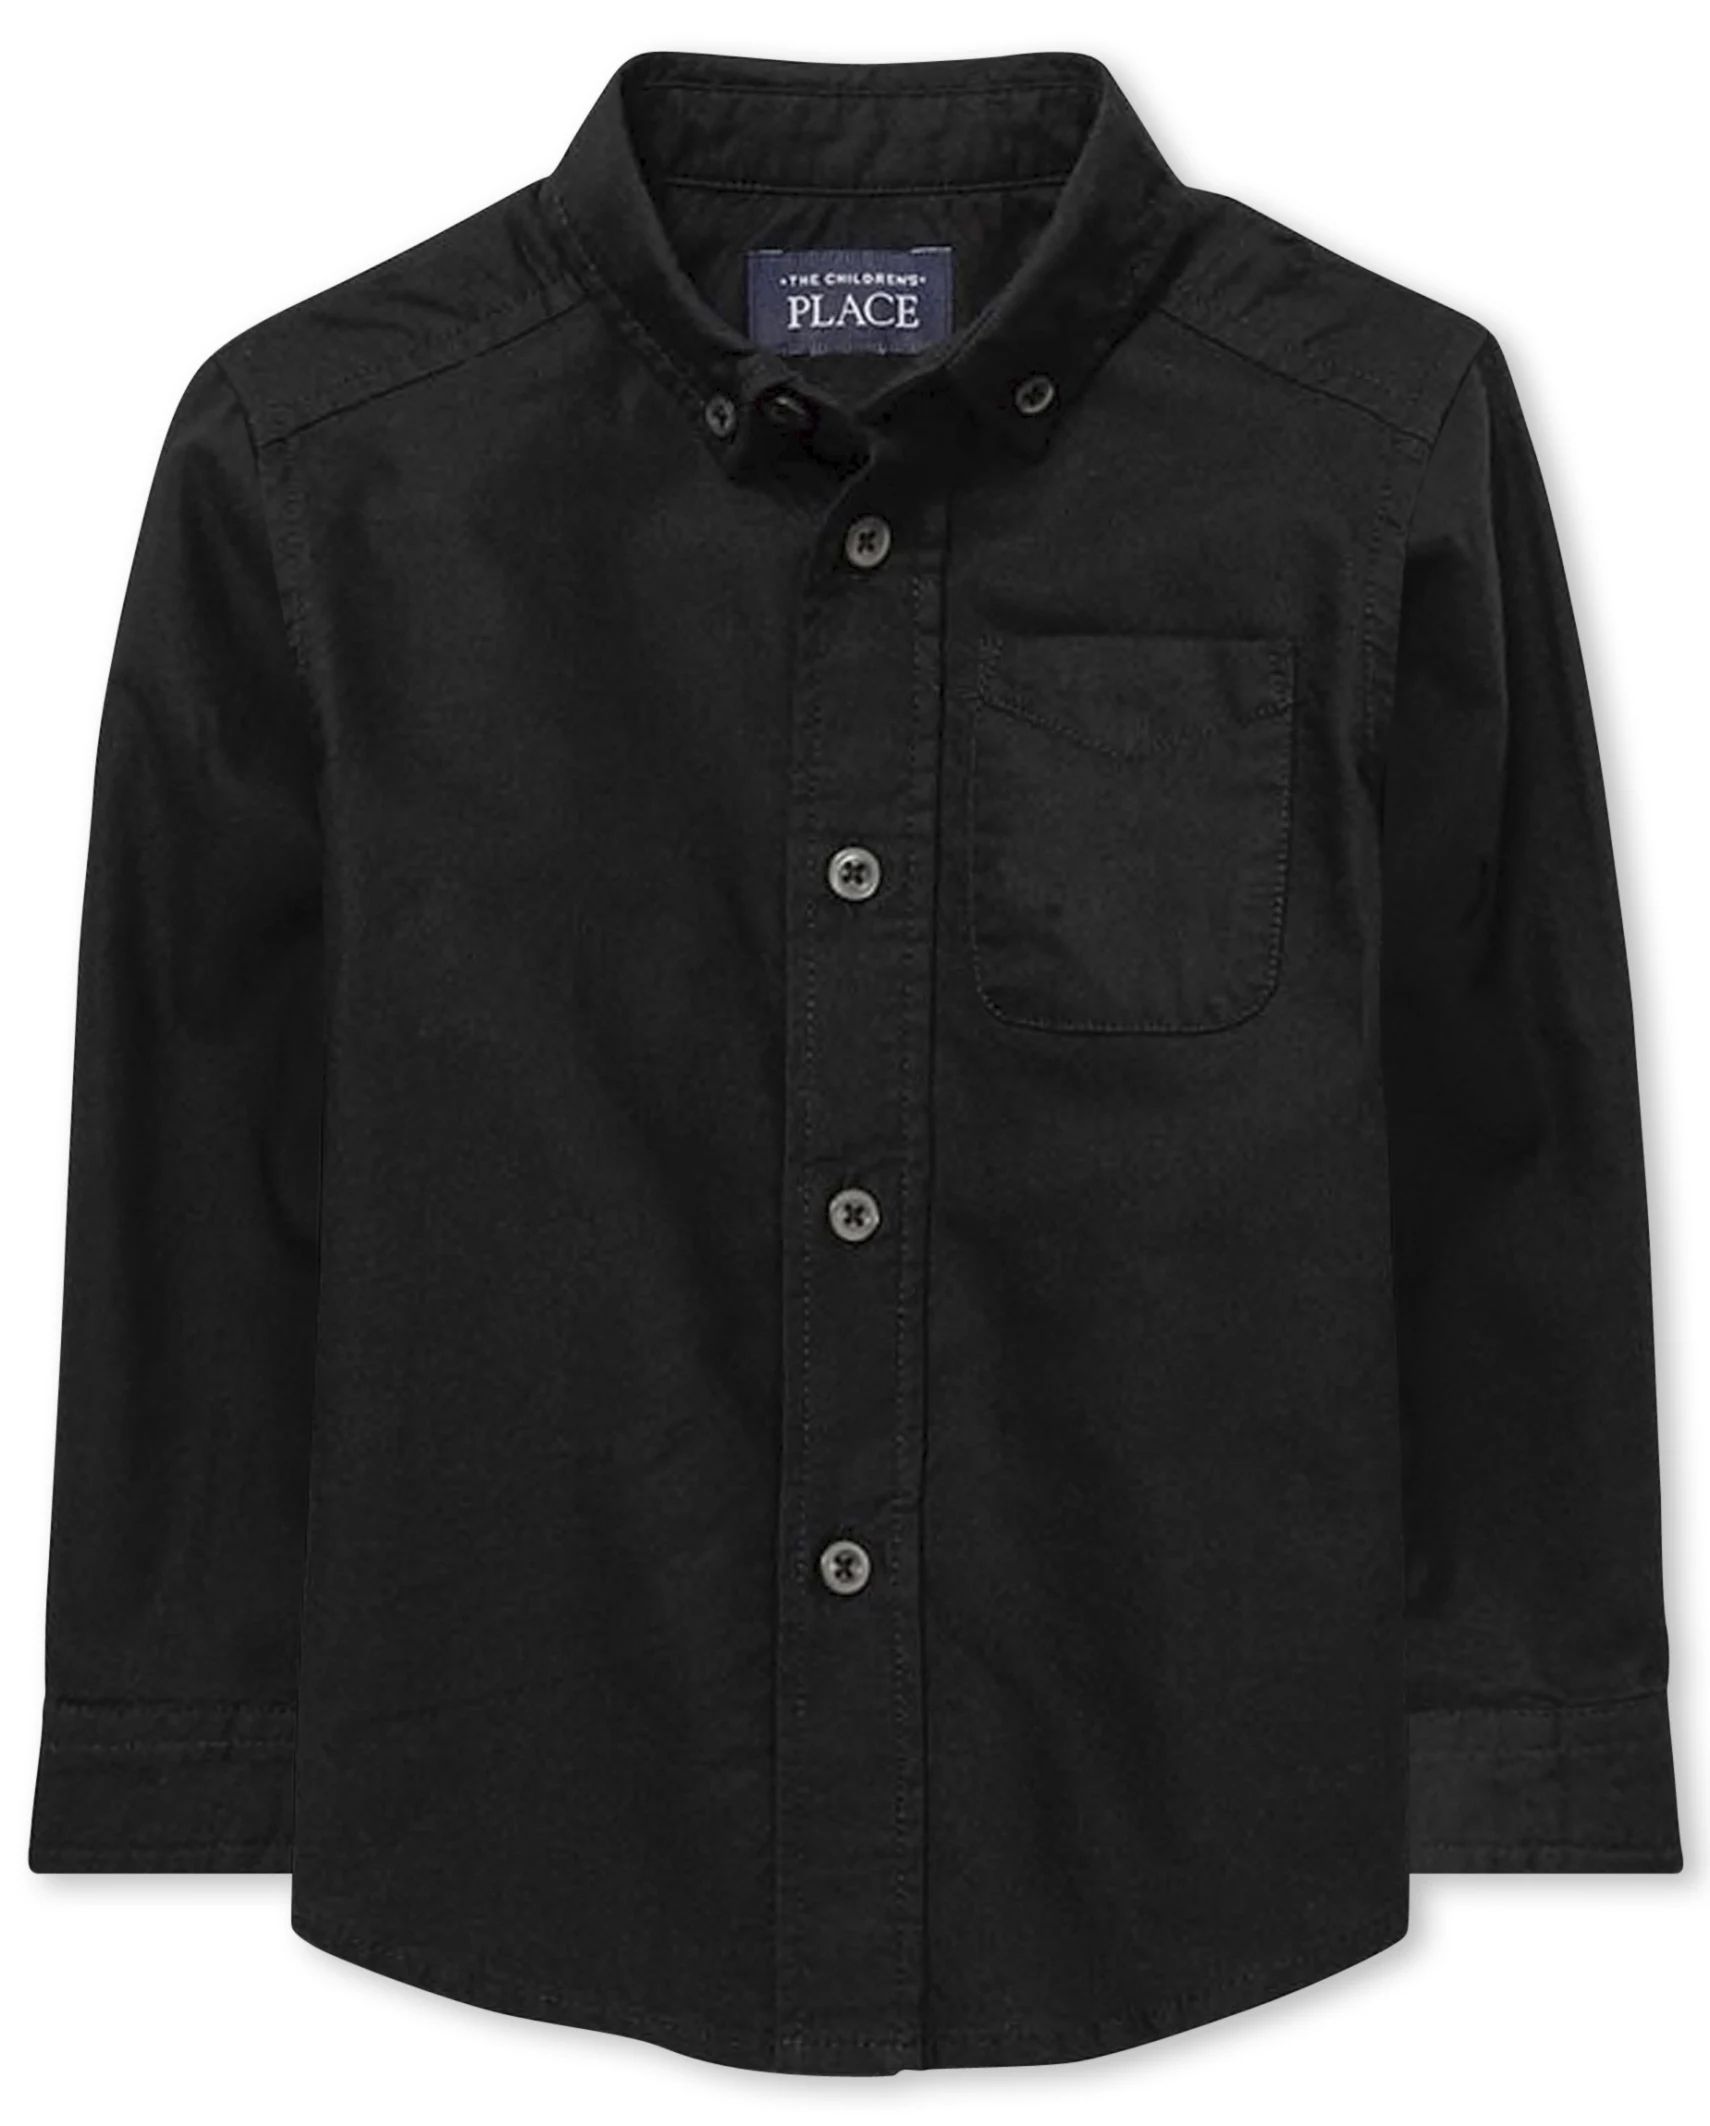 Toddler Boys Uniform Long Sleeve Oxford Button Down Shirt | The Children's Place  - BLACK | The Children's Place